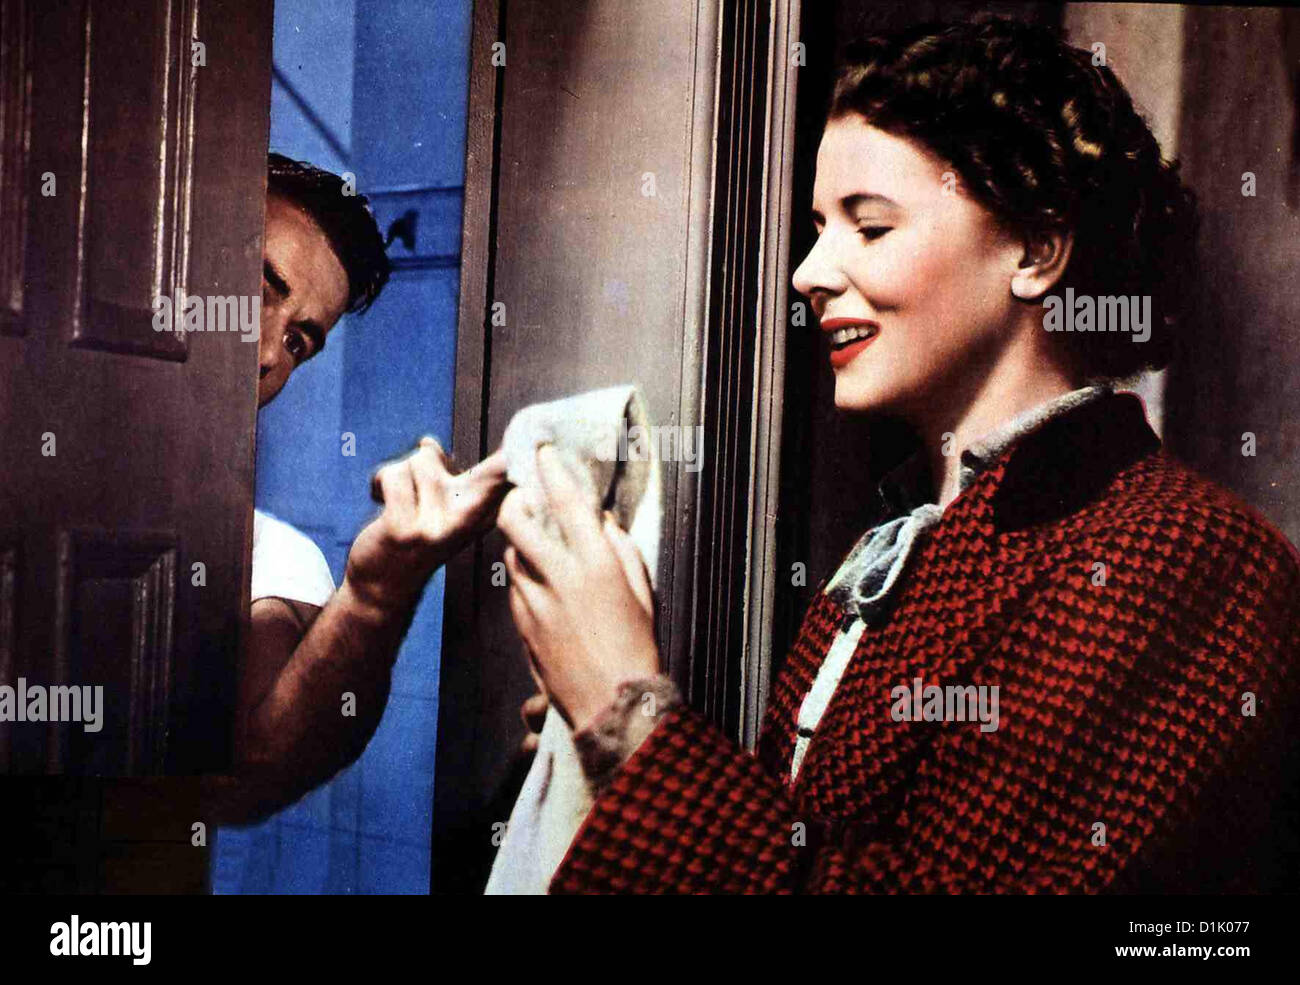 Es Begann Mit Einem Kuss   Big Lift, The   Danny (Montgomery Clift), Frederica (Cornell Borchers) *** Local Caption *** 1950  -- Stock Photo